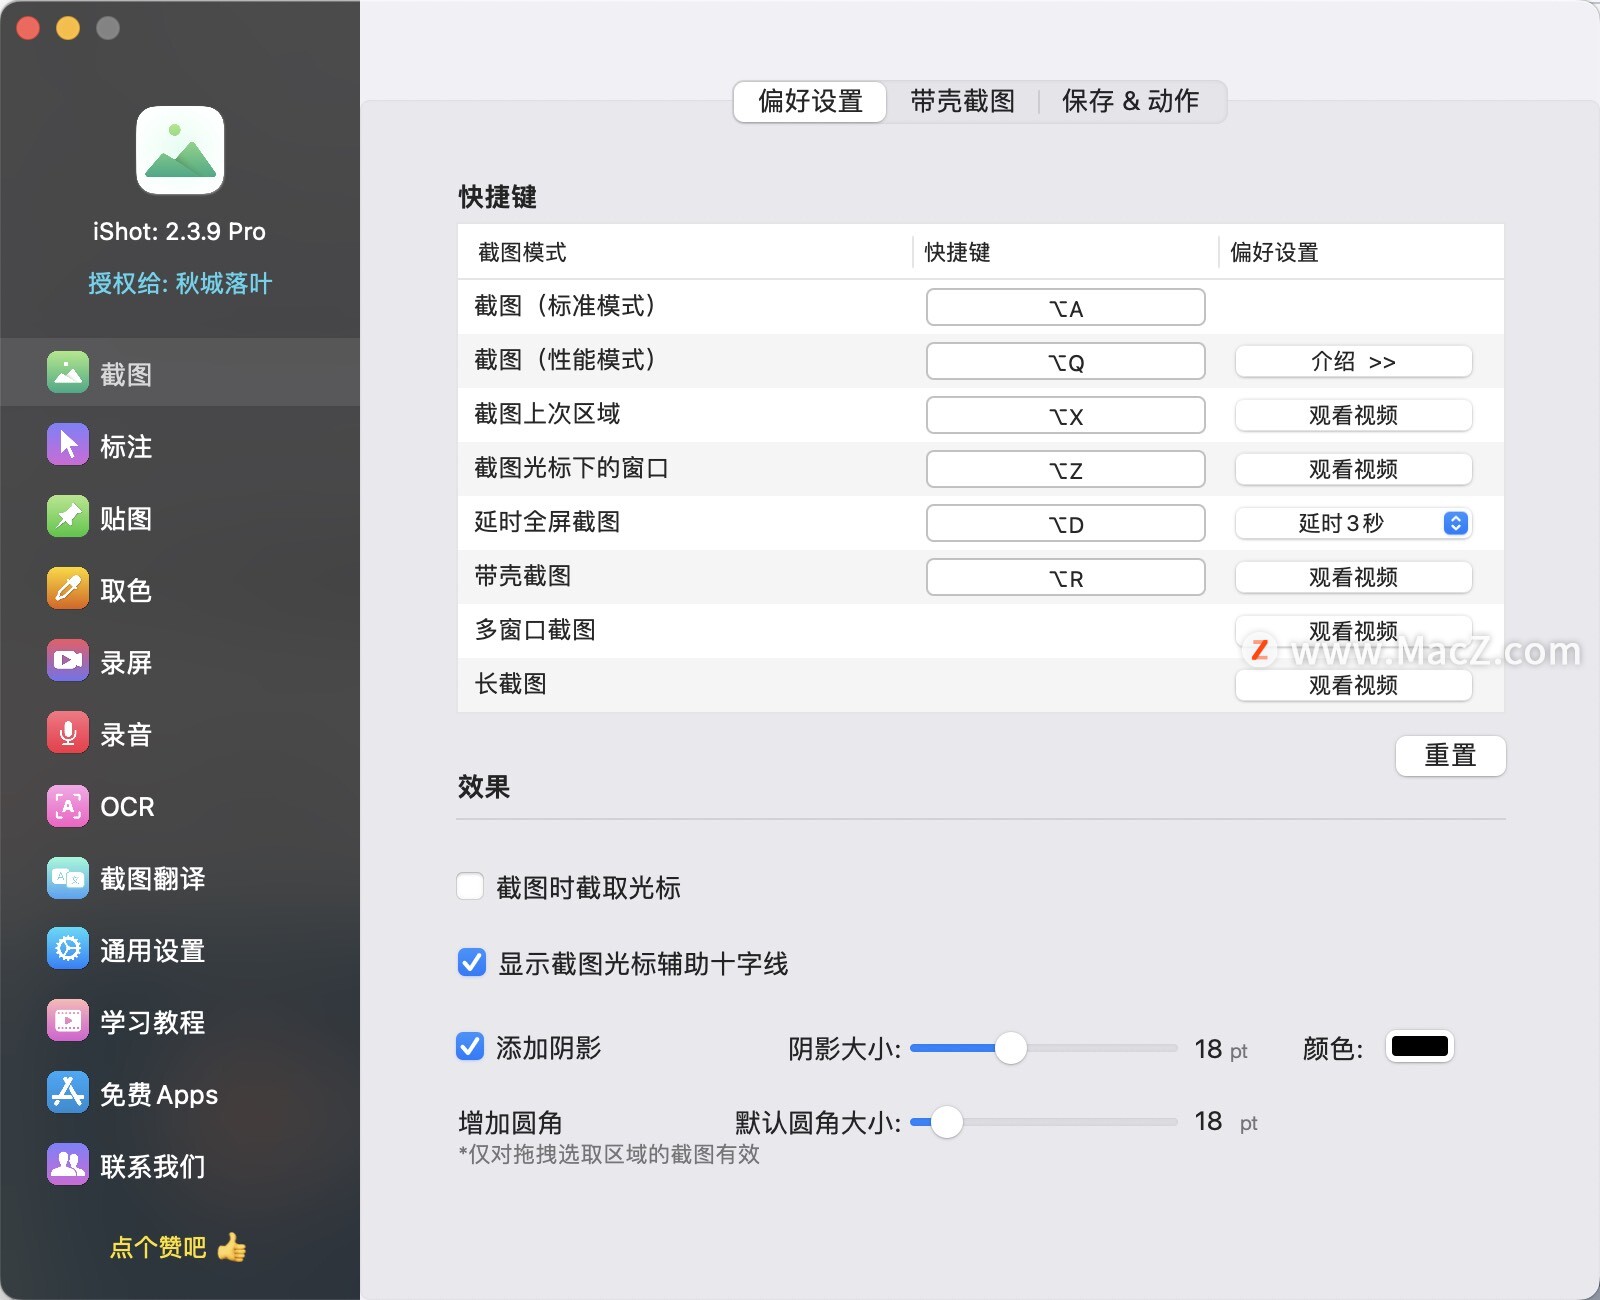 iShot Pro for Mac 2.3.9最新中文版